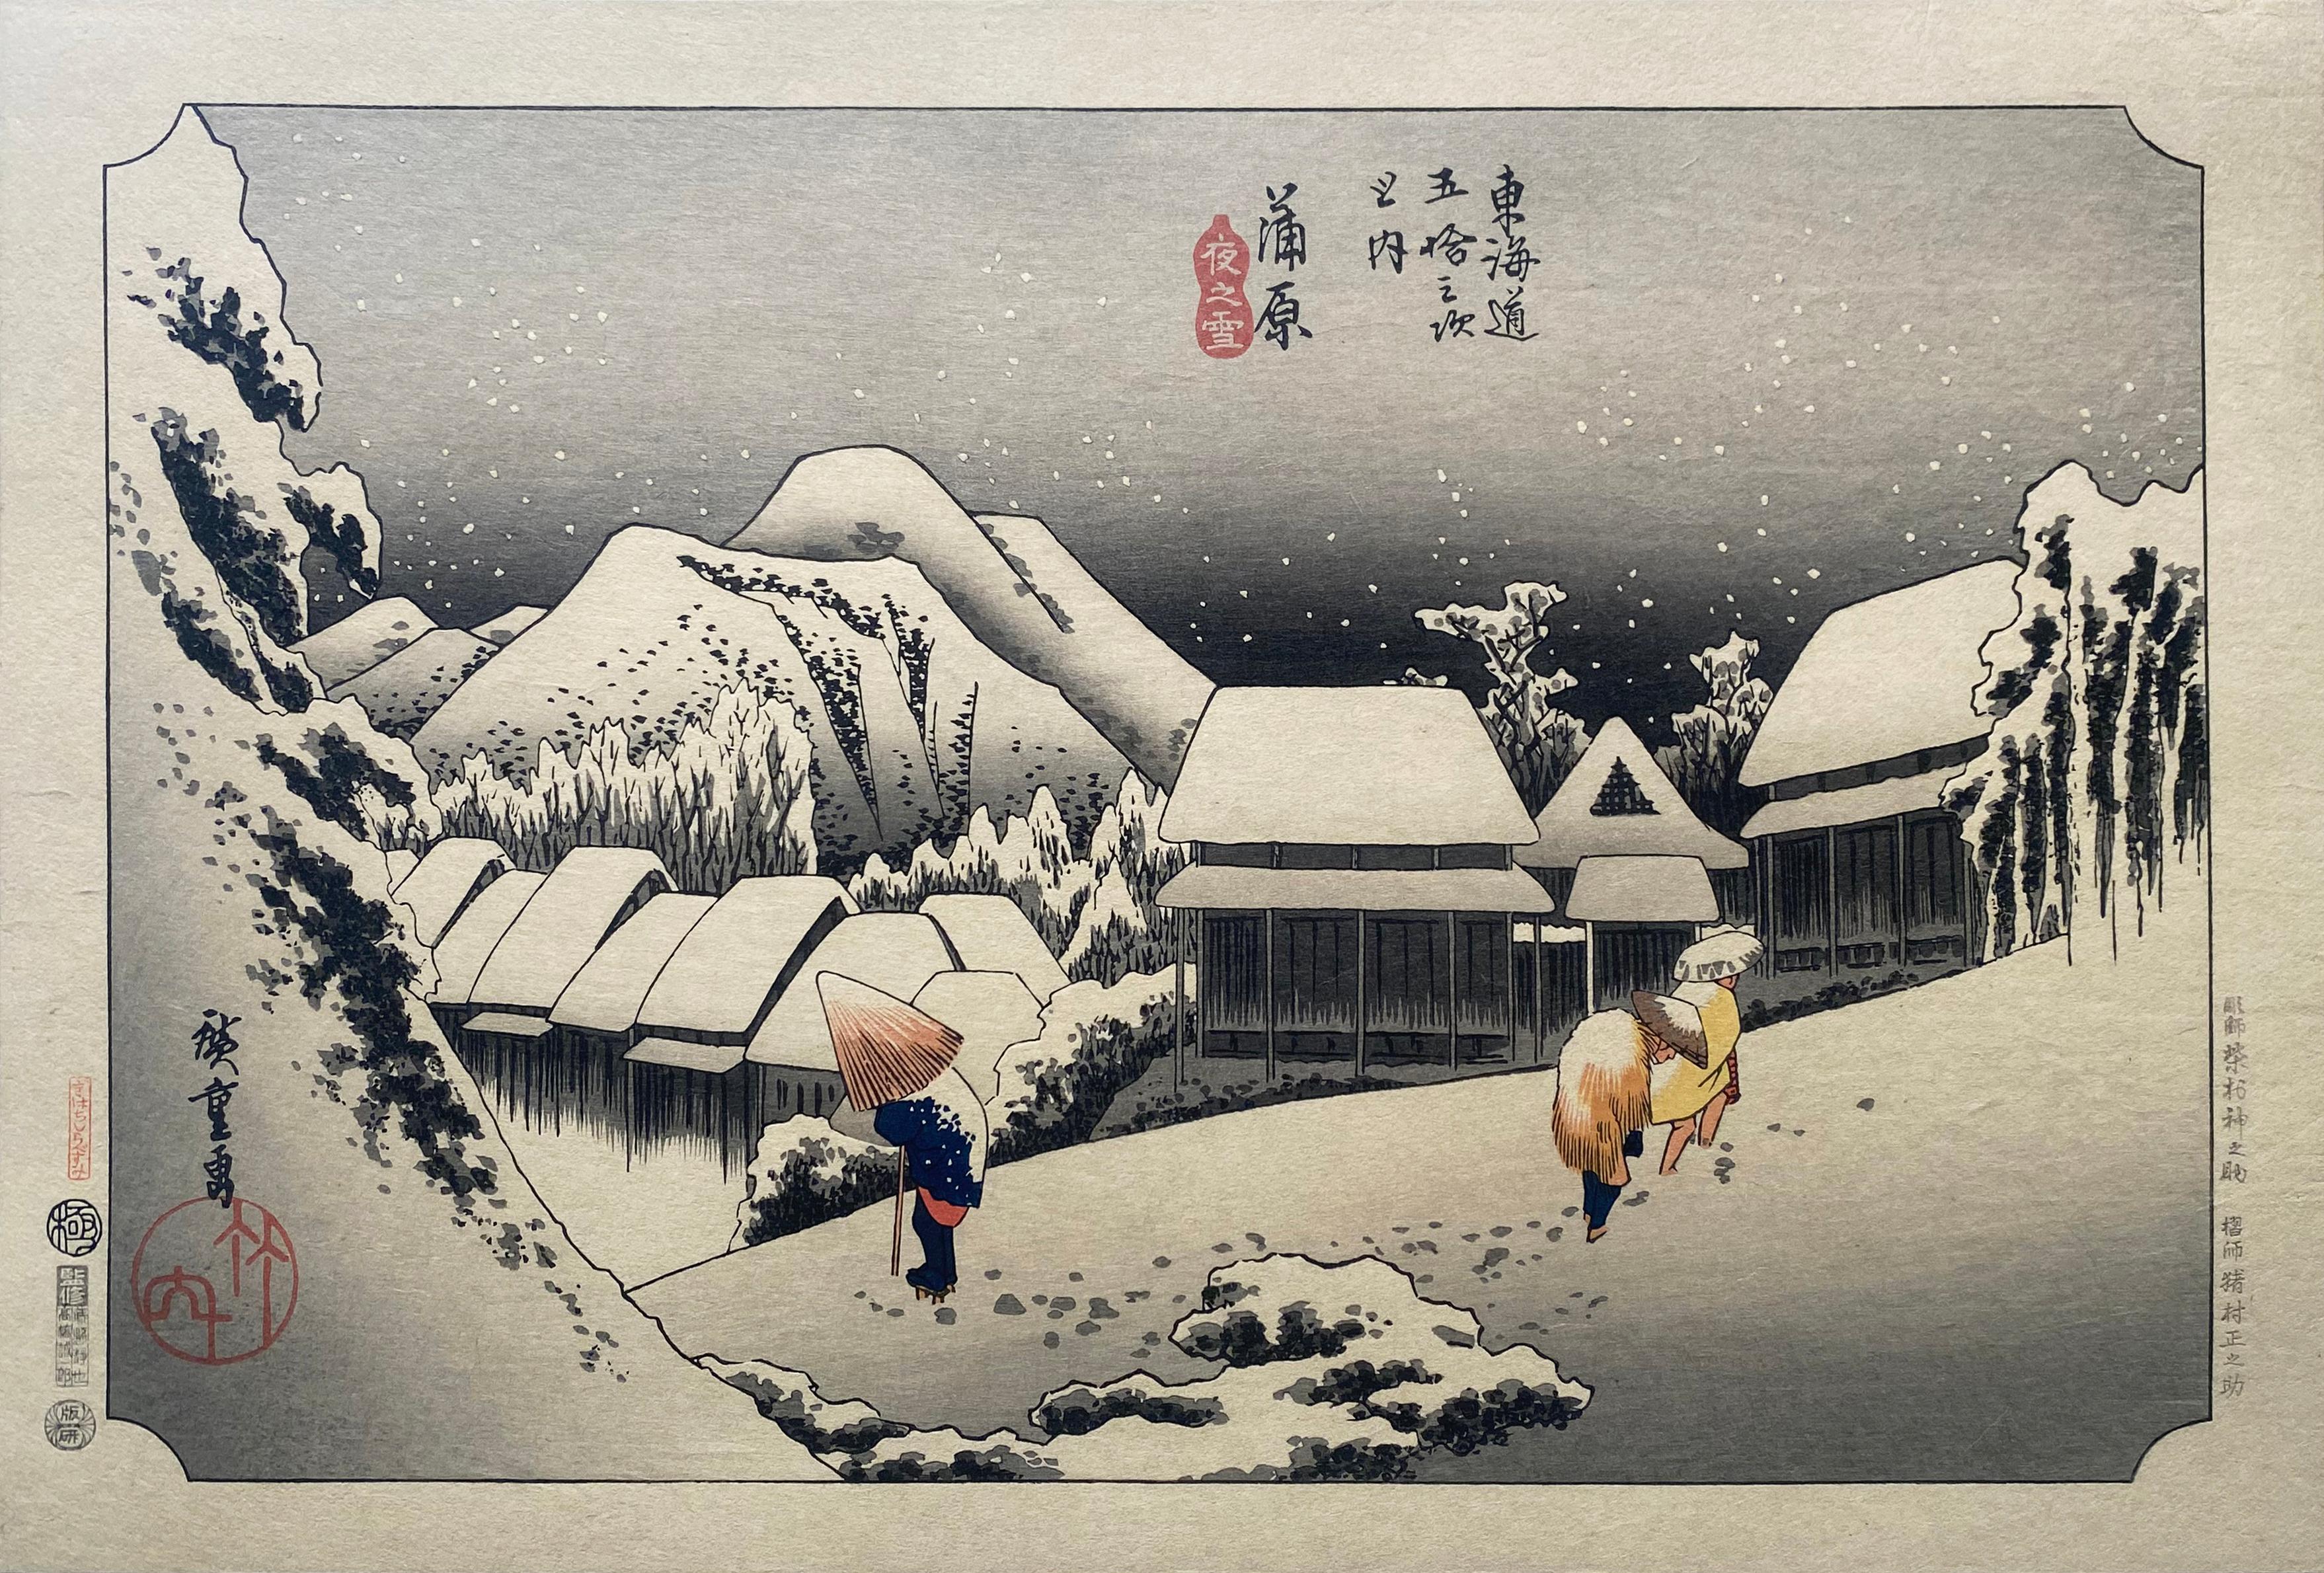 Utagawa Hiroshige (Ando Hiroshige) Landscape Print - 'View of Kanbara', After Utagawa Hiroshige 歌川廣重, Ukiyo-e Woodblock, Tokaido